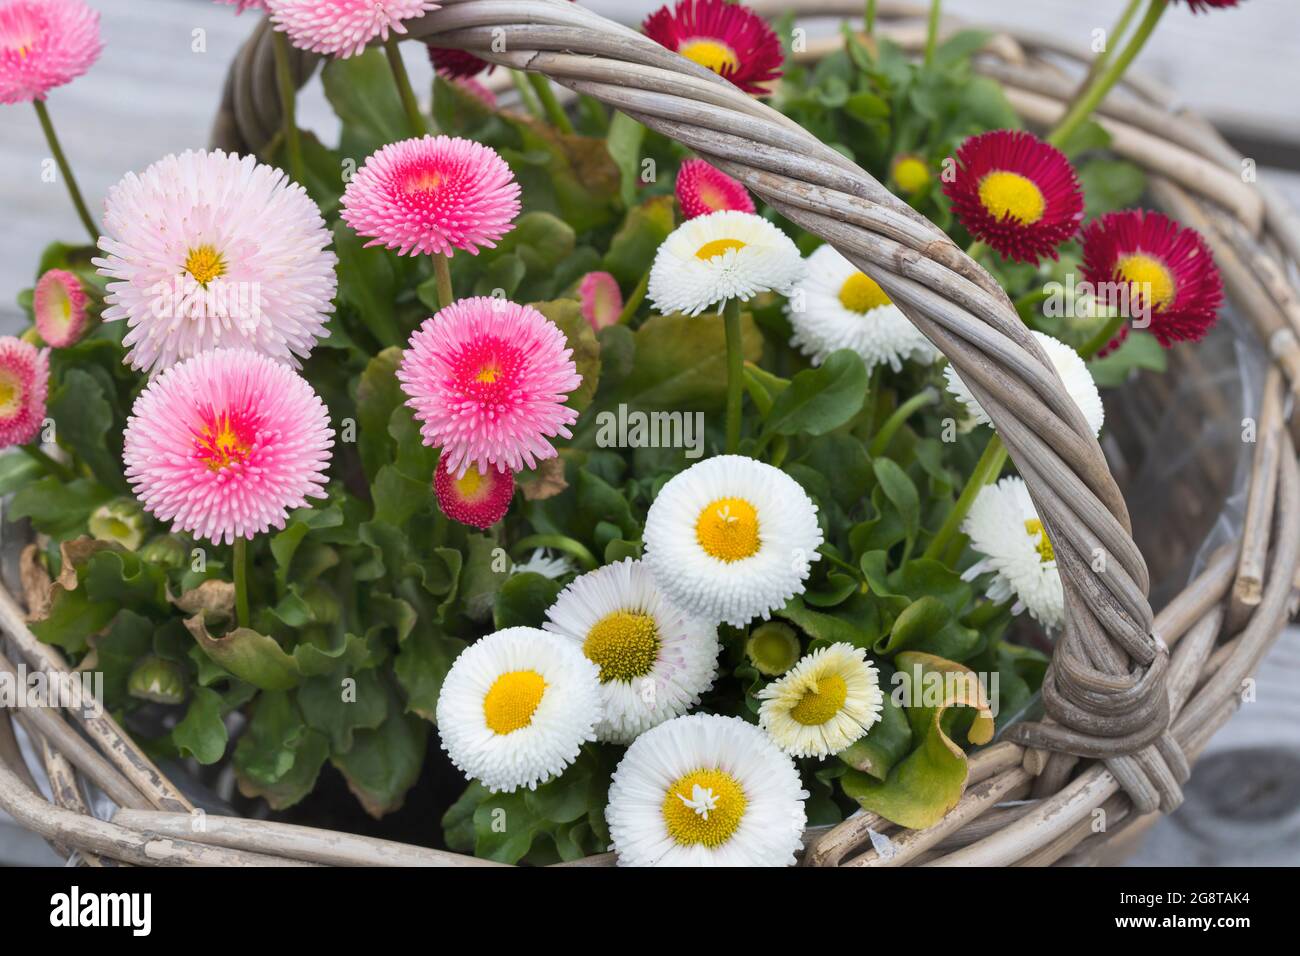 common daisy, lawn daisy, English daisy (Bellis perennis), colourful cultivars in a basket Stock Photo